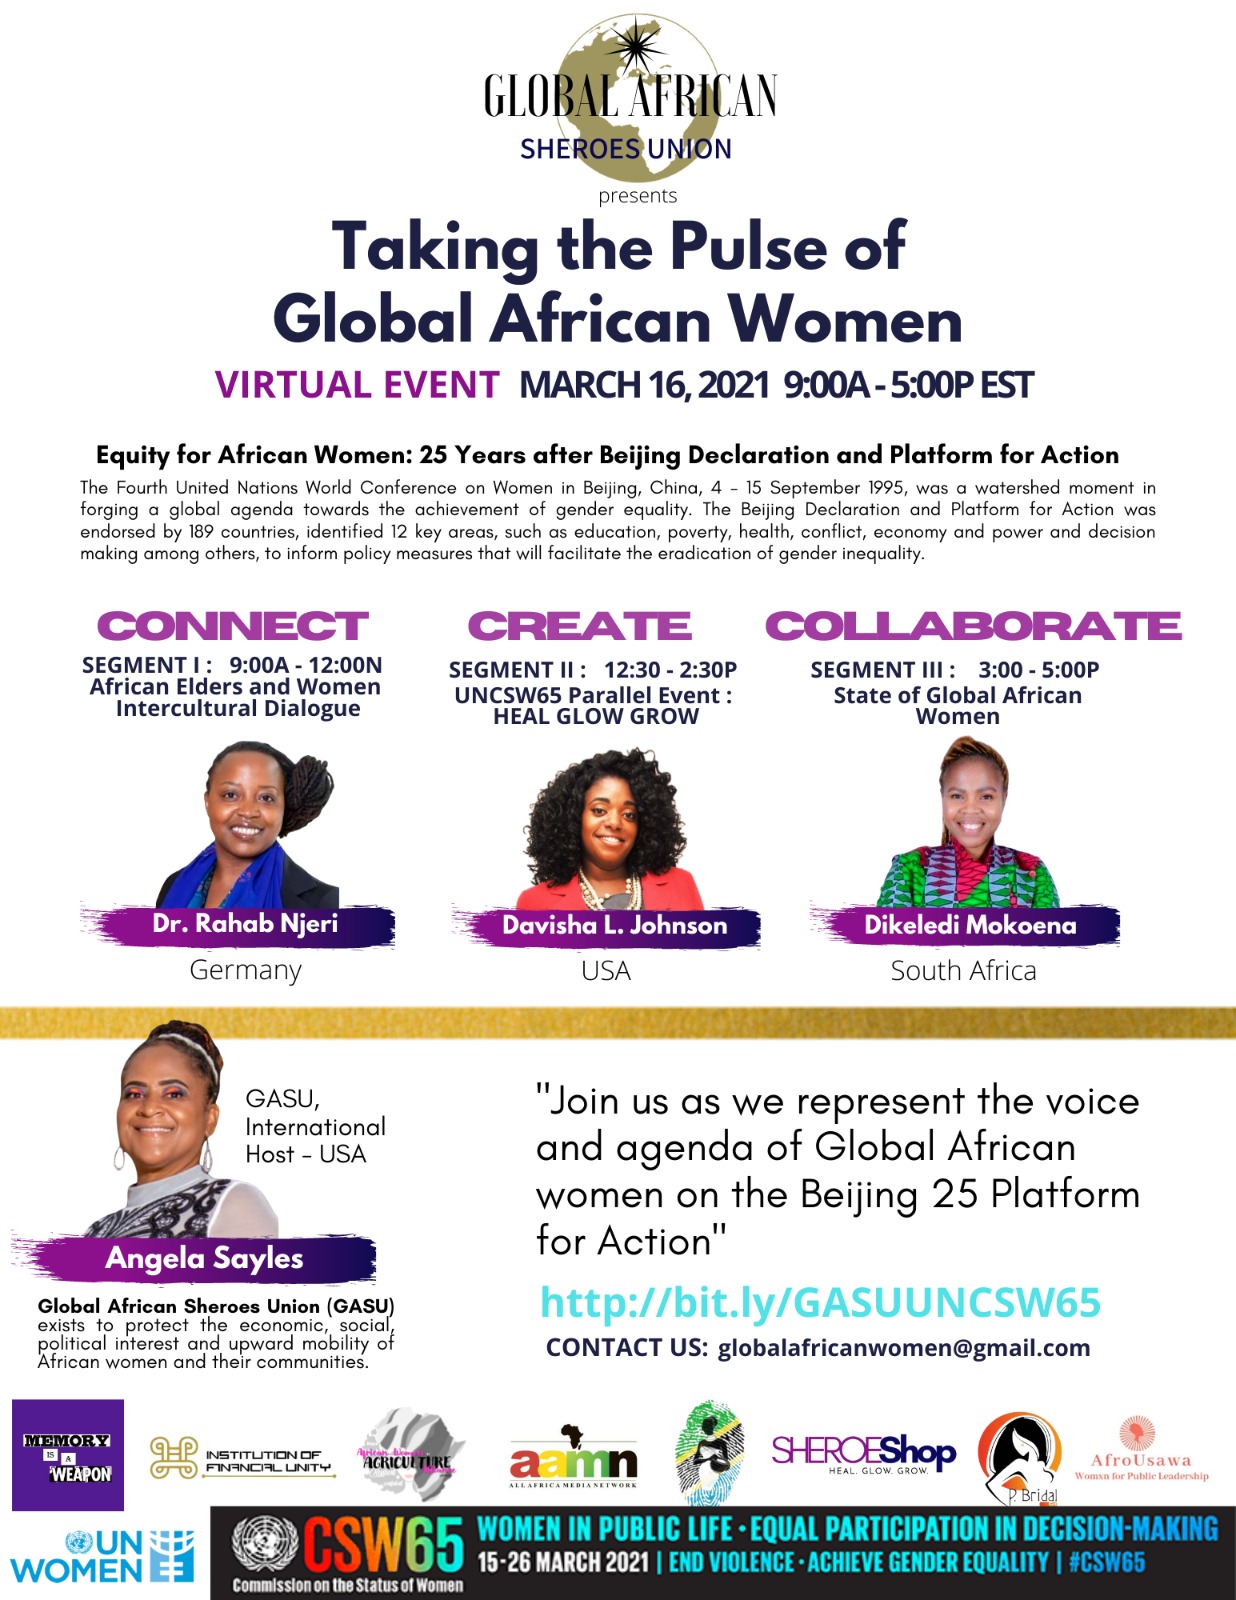 www.nigerianeyenewspaper.com_SHEROES-ready-for-Taking-the-Pulse-of-Global-African-Women